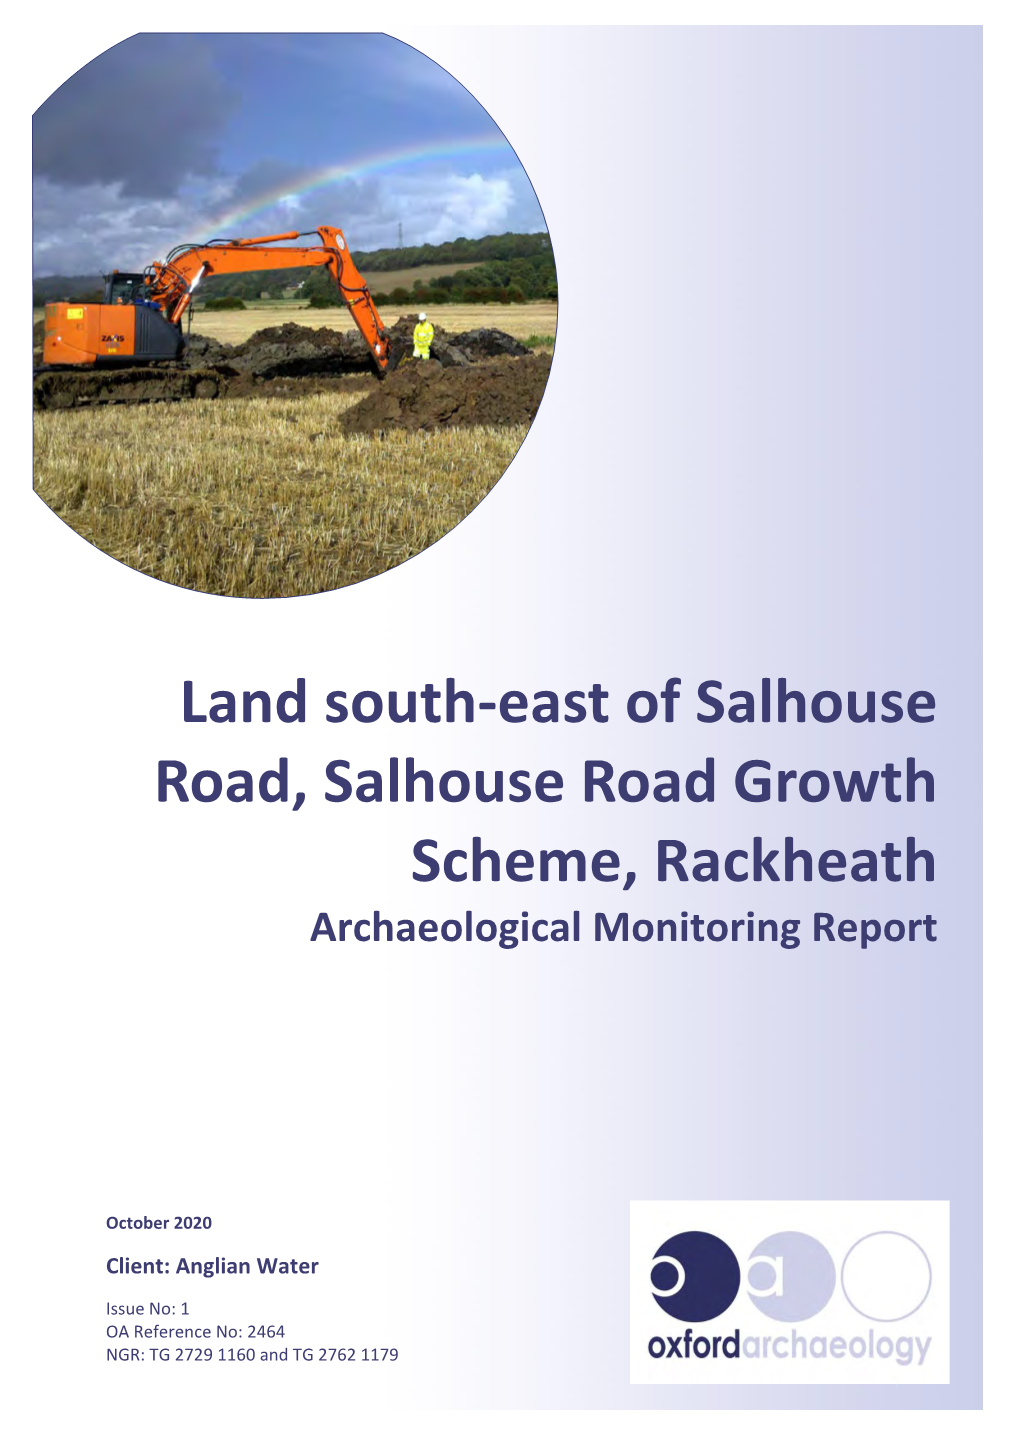 Land South-East of Salhouse Road, Salhouse Road Growth Scheme, Rackheath V.1